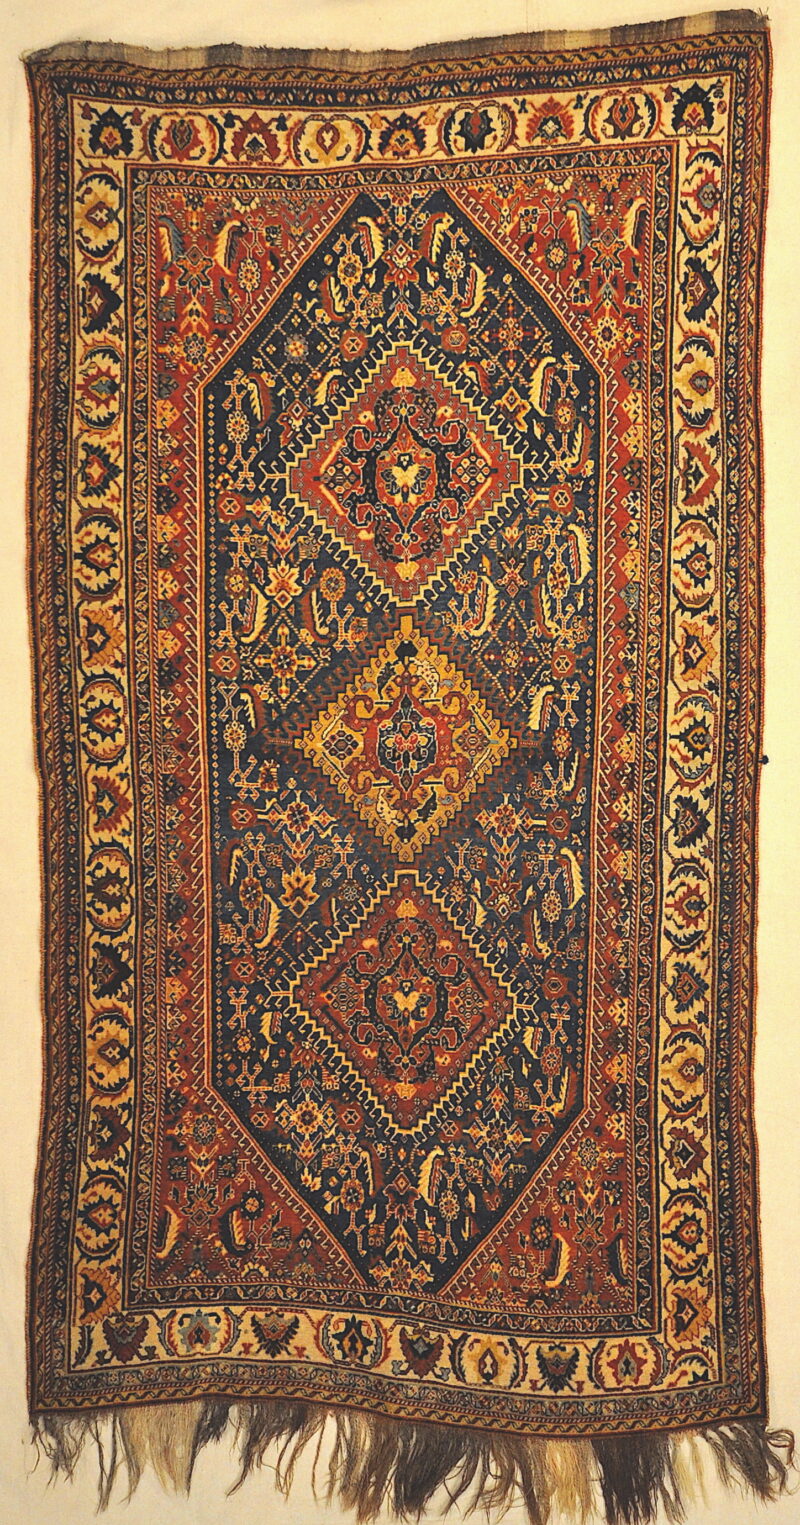 Antique Persian Qashqai Rug in Perfect Condition Genuine Authentic Woven Carpet Art Santa Barbara Design Center Rugs and More